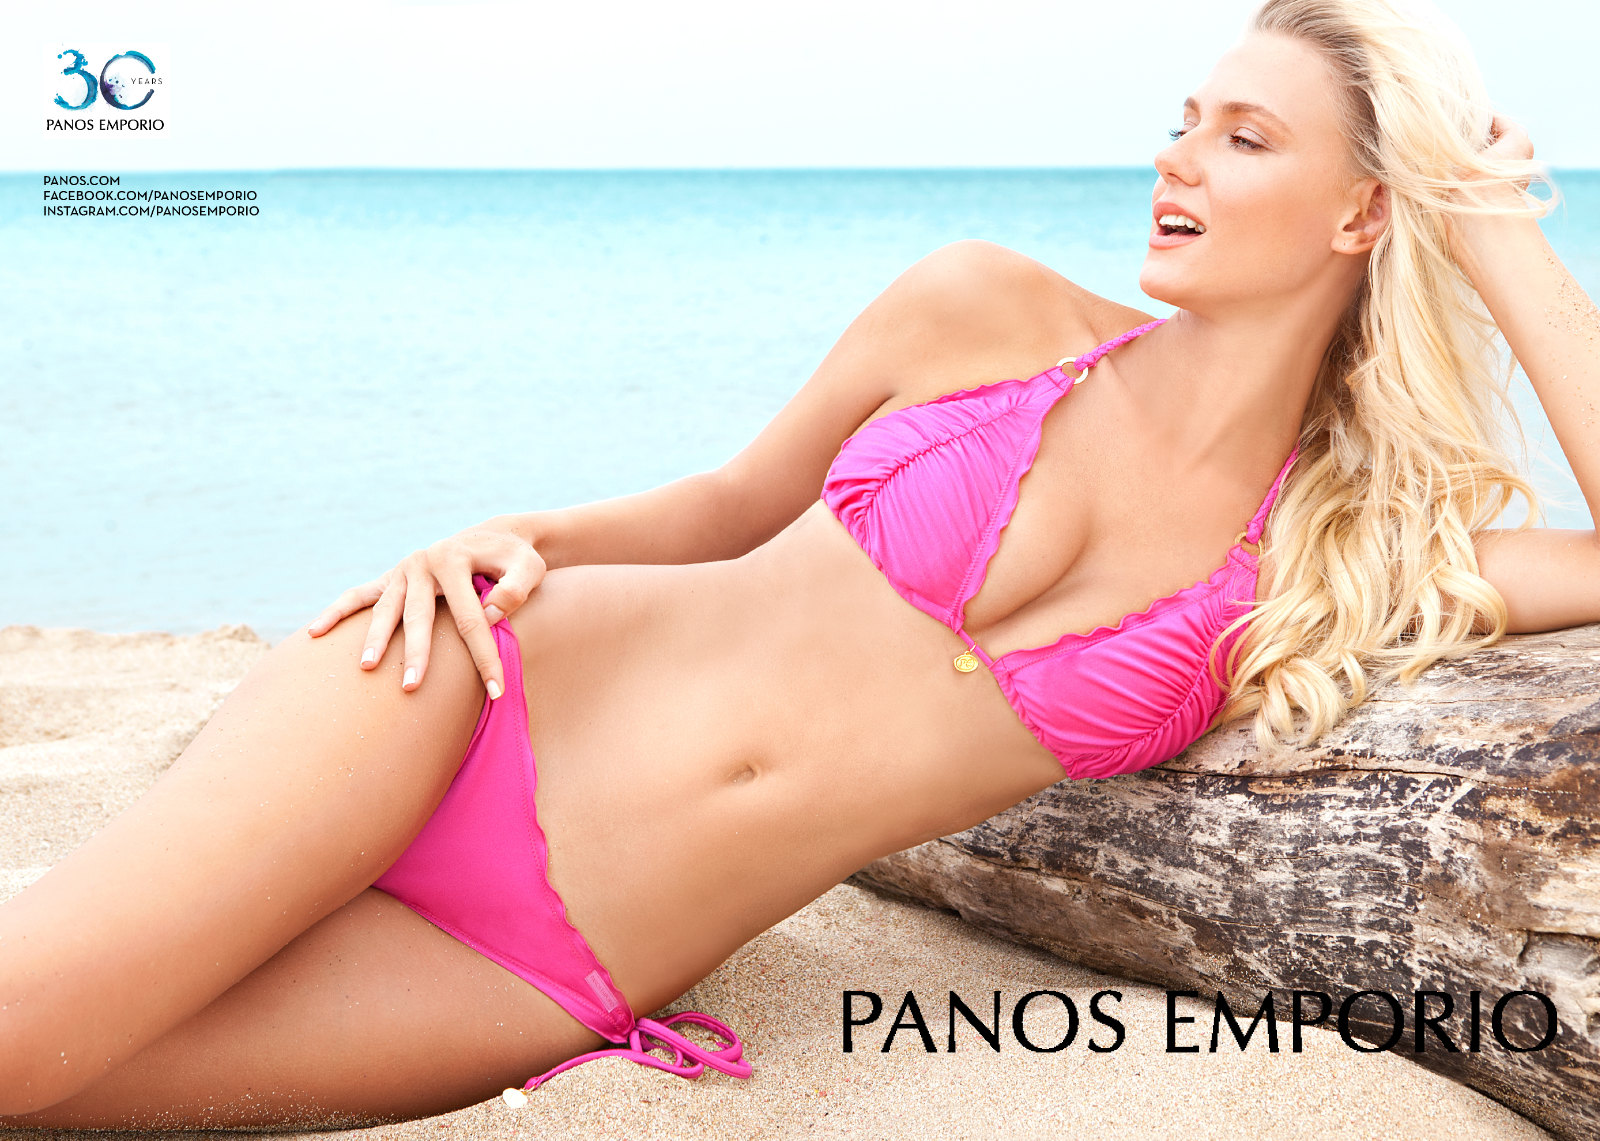 Panos Emporio 30th anniversary advertisement spread